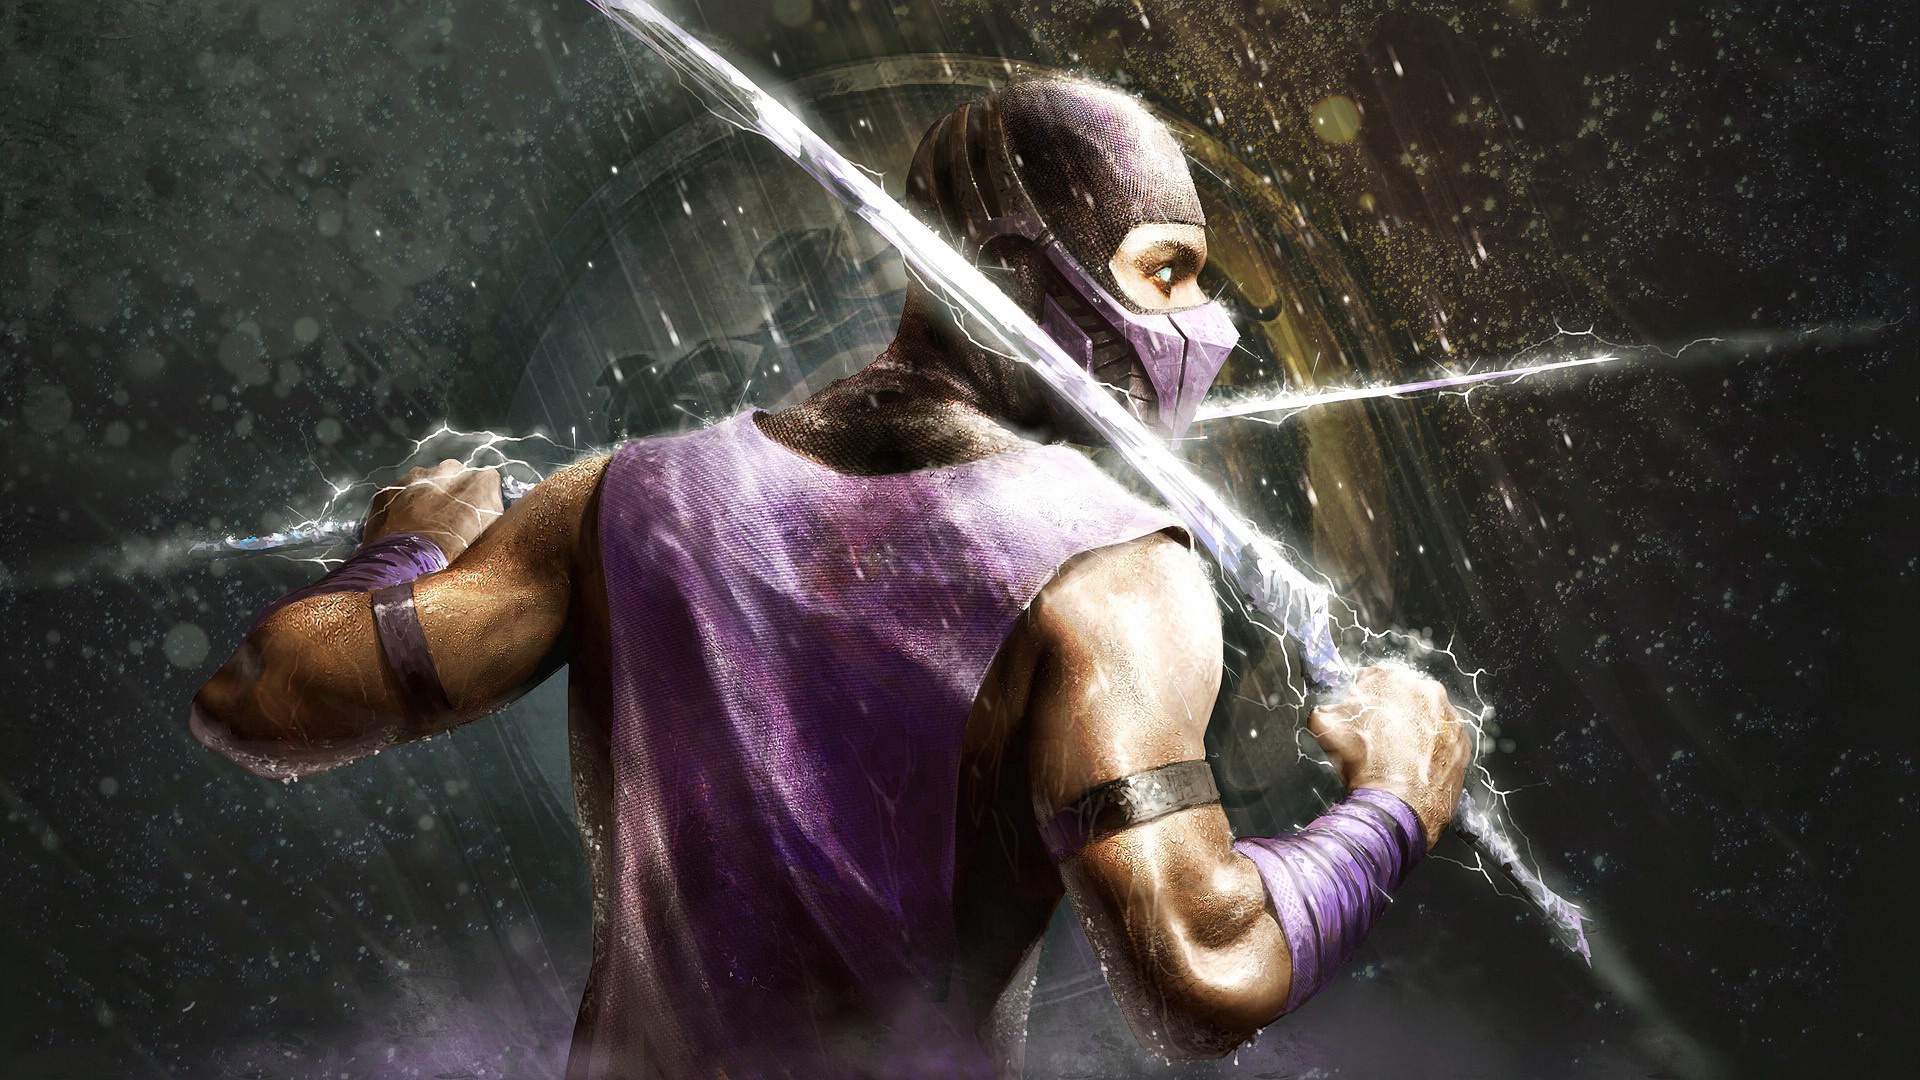 Download Rain In Mortal Kombat HD Wallpapers 5617 Full Size